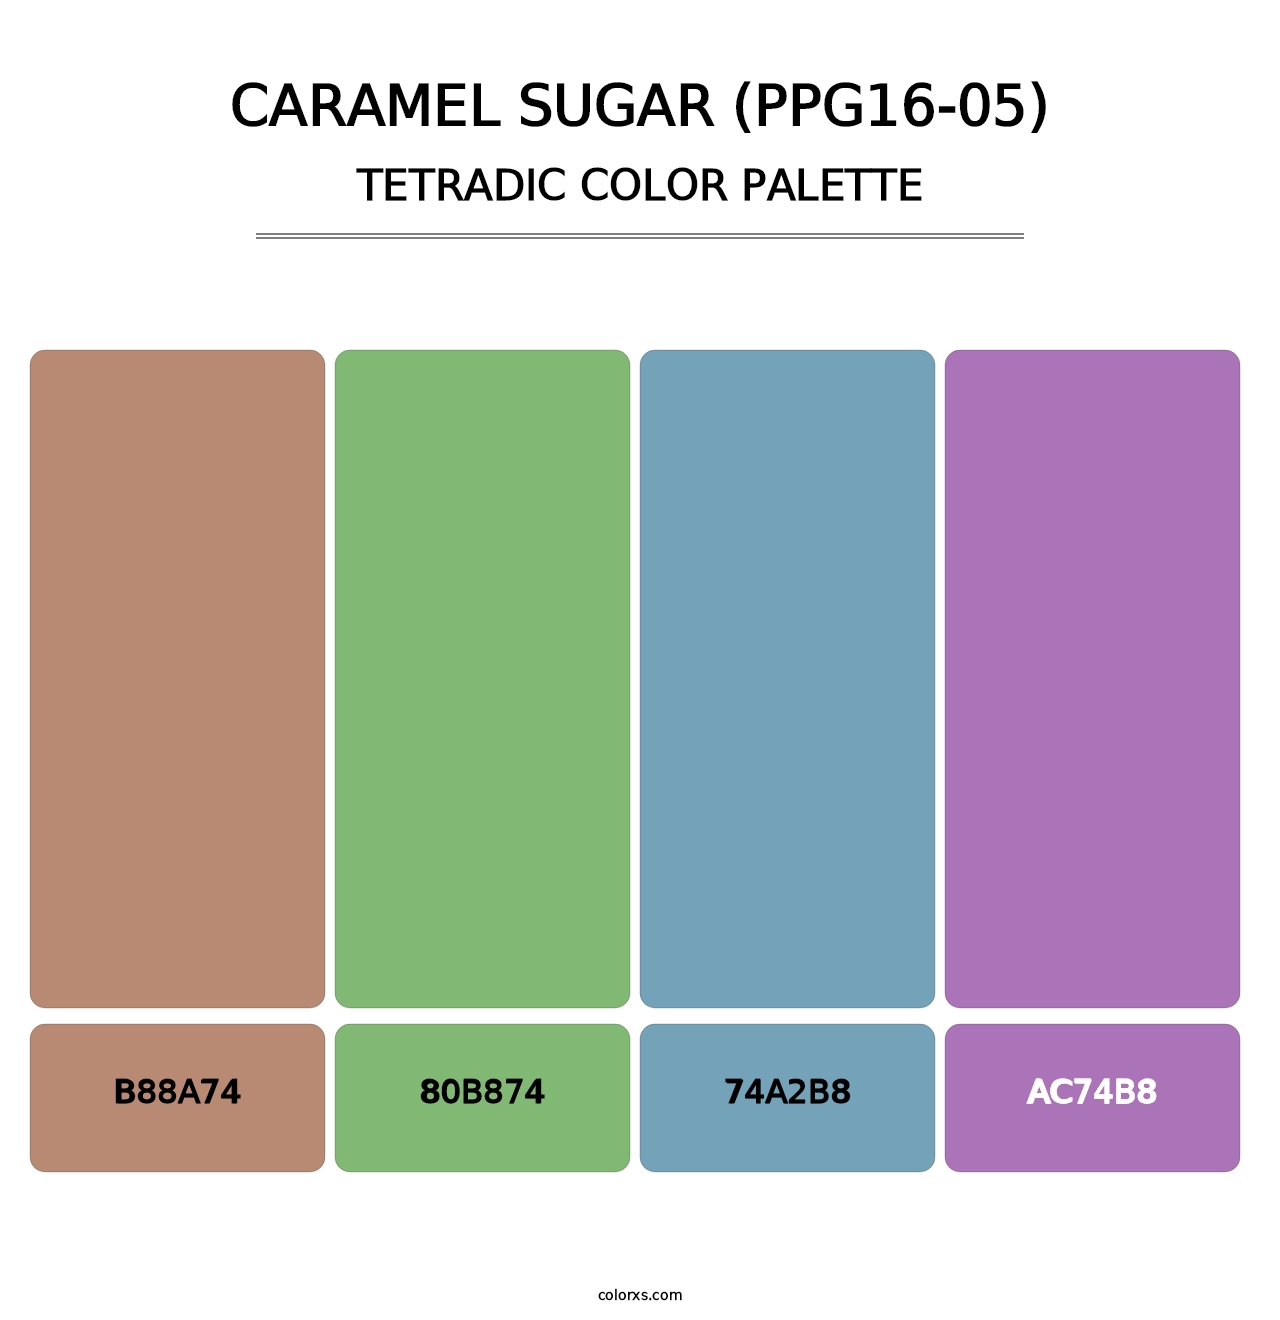 Caramel Sugar (PPG16-05) - Tetradic Color Palette